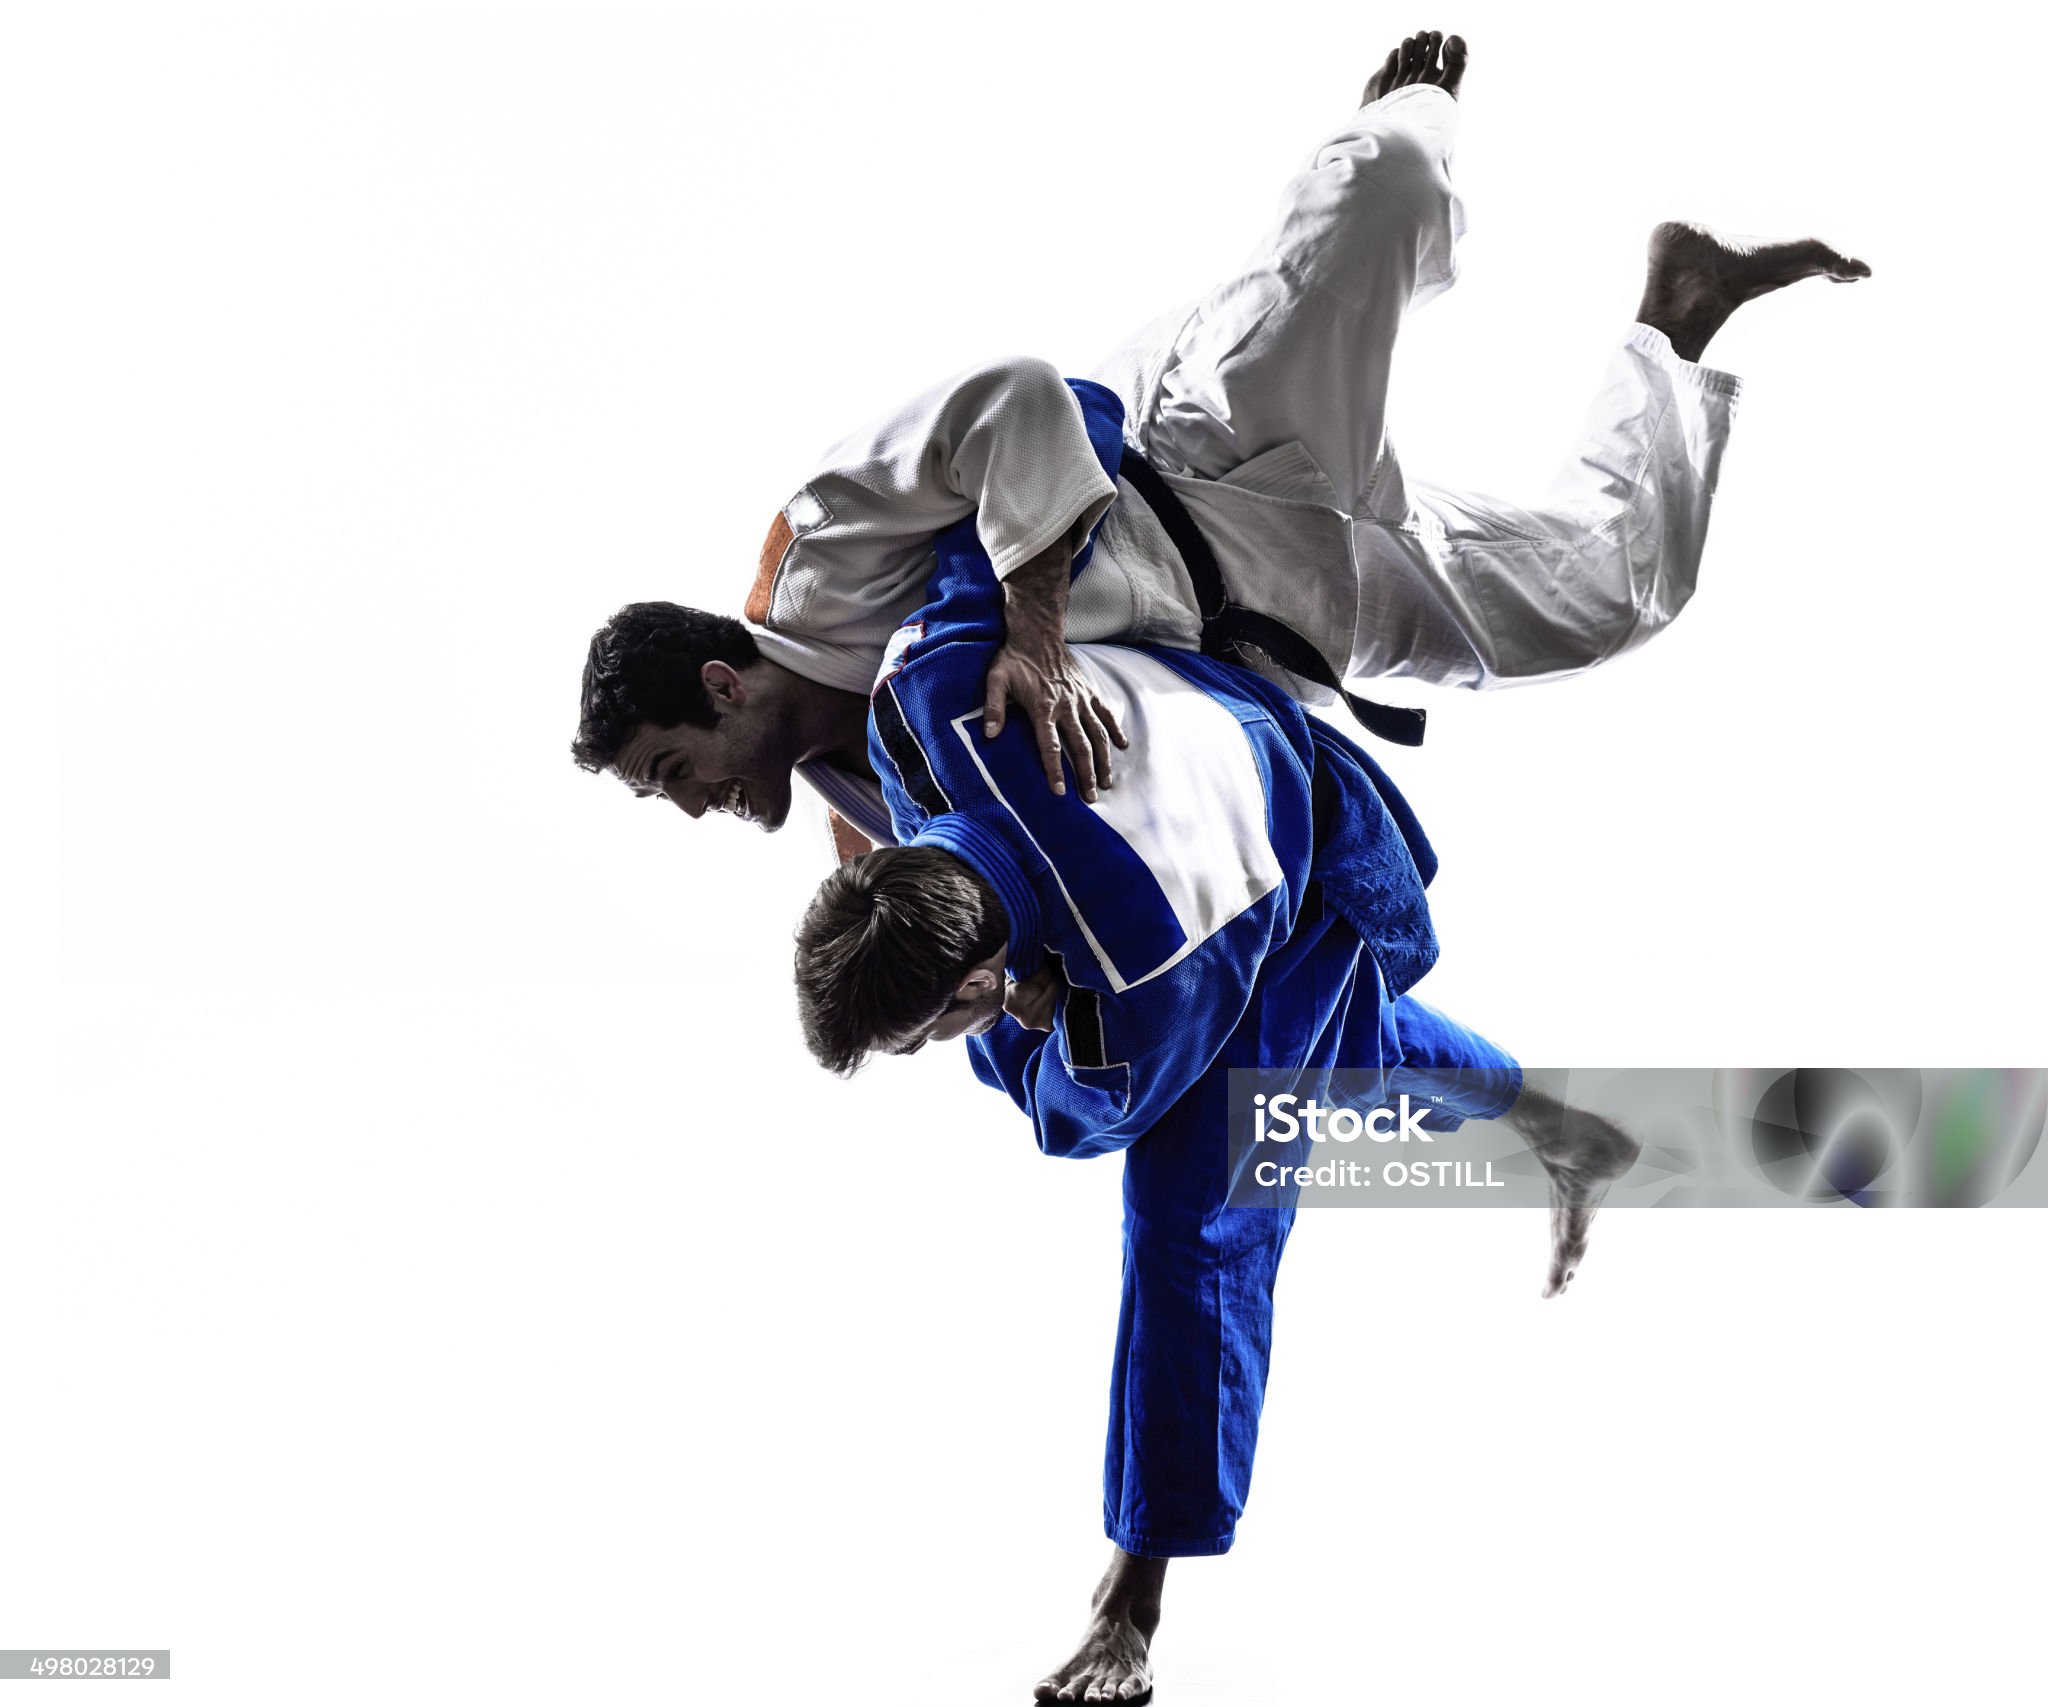 Le Blanc Mesnil : le club de judo remporte une manche judiciaire